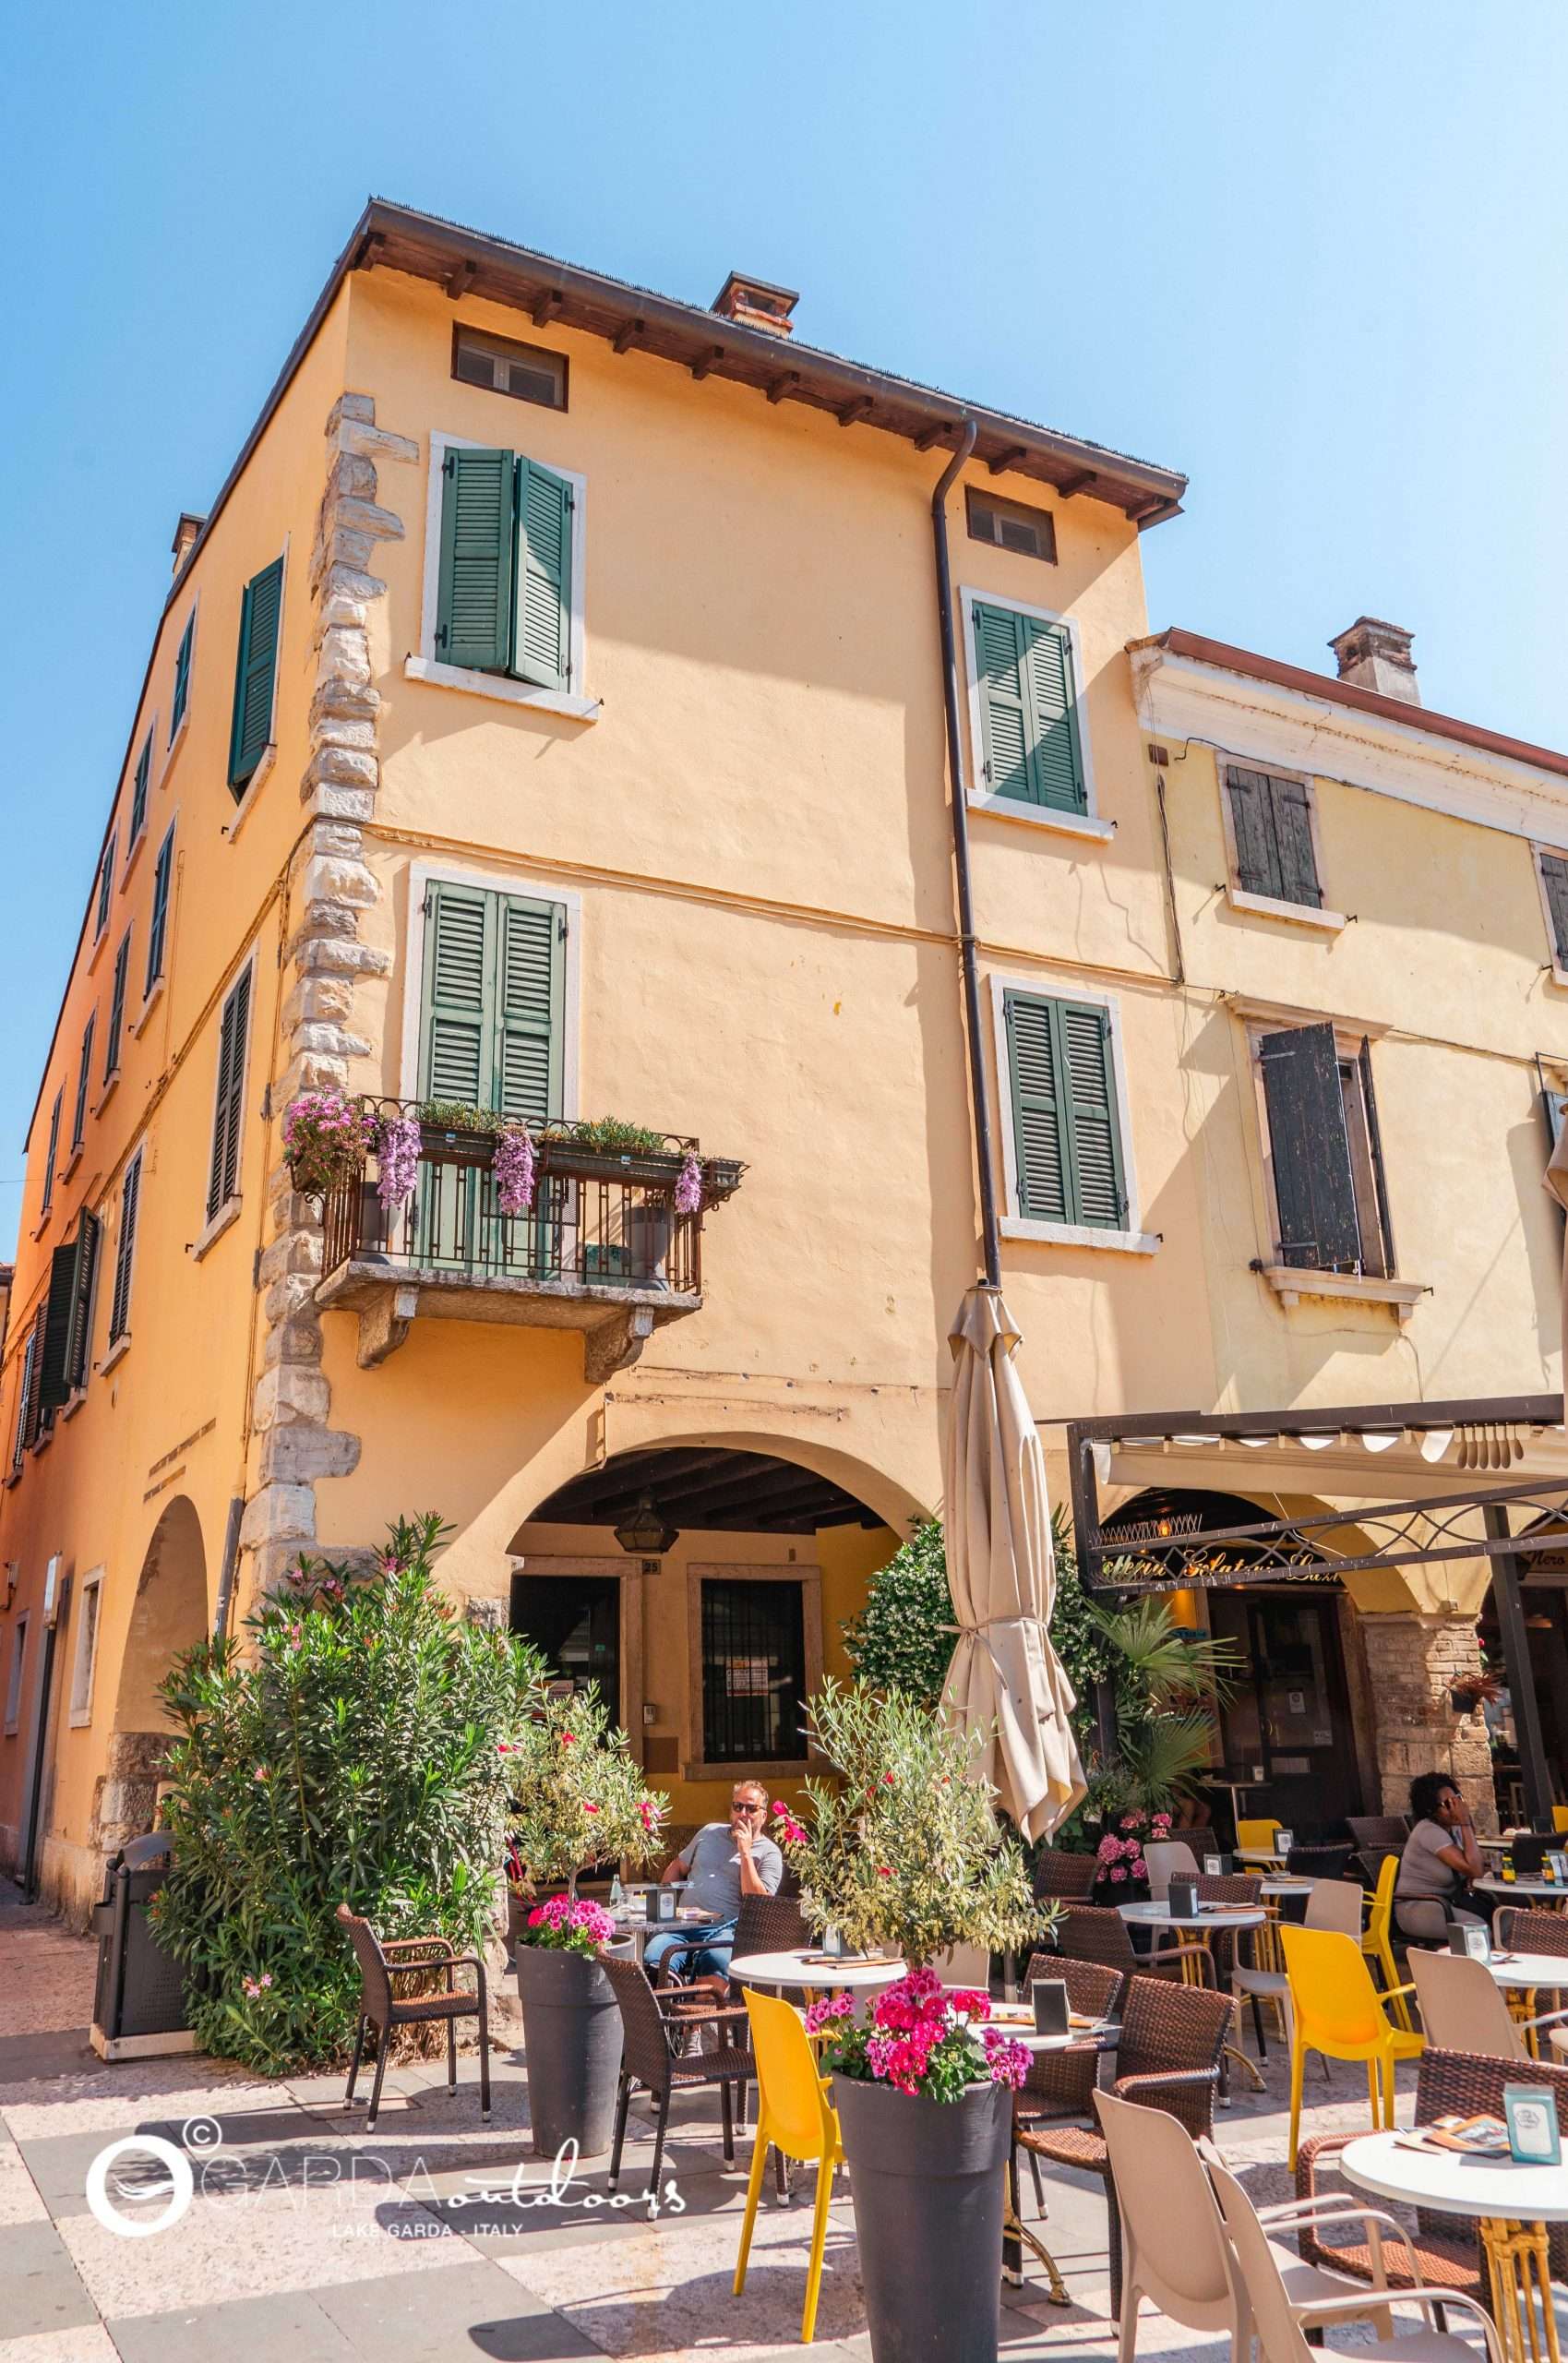 Lazise, ​​on Lake Garda: a jewel village and the first municipality of Italy. 